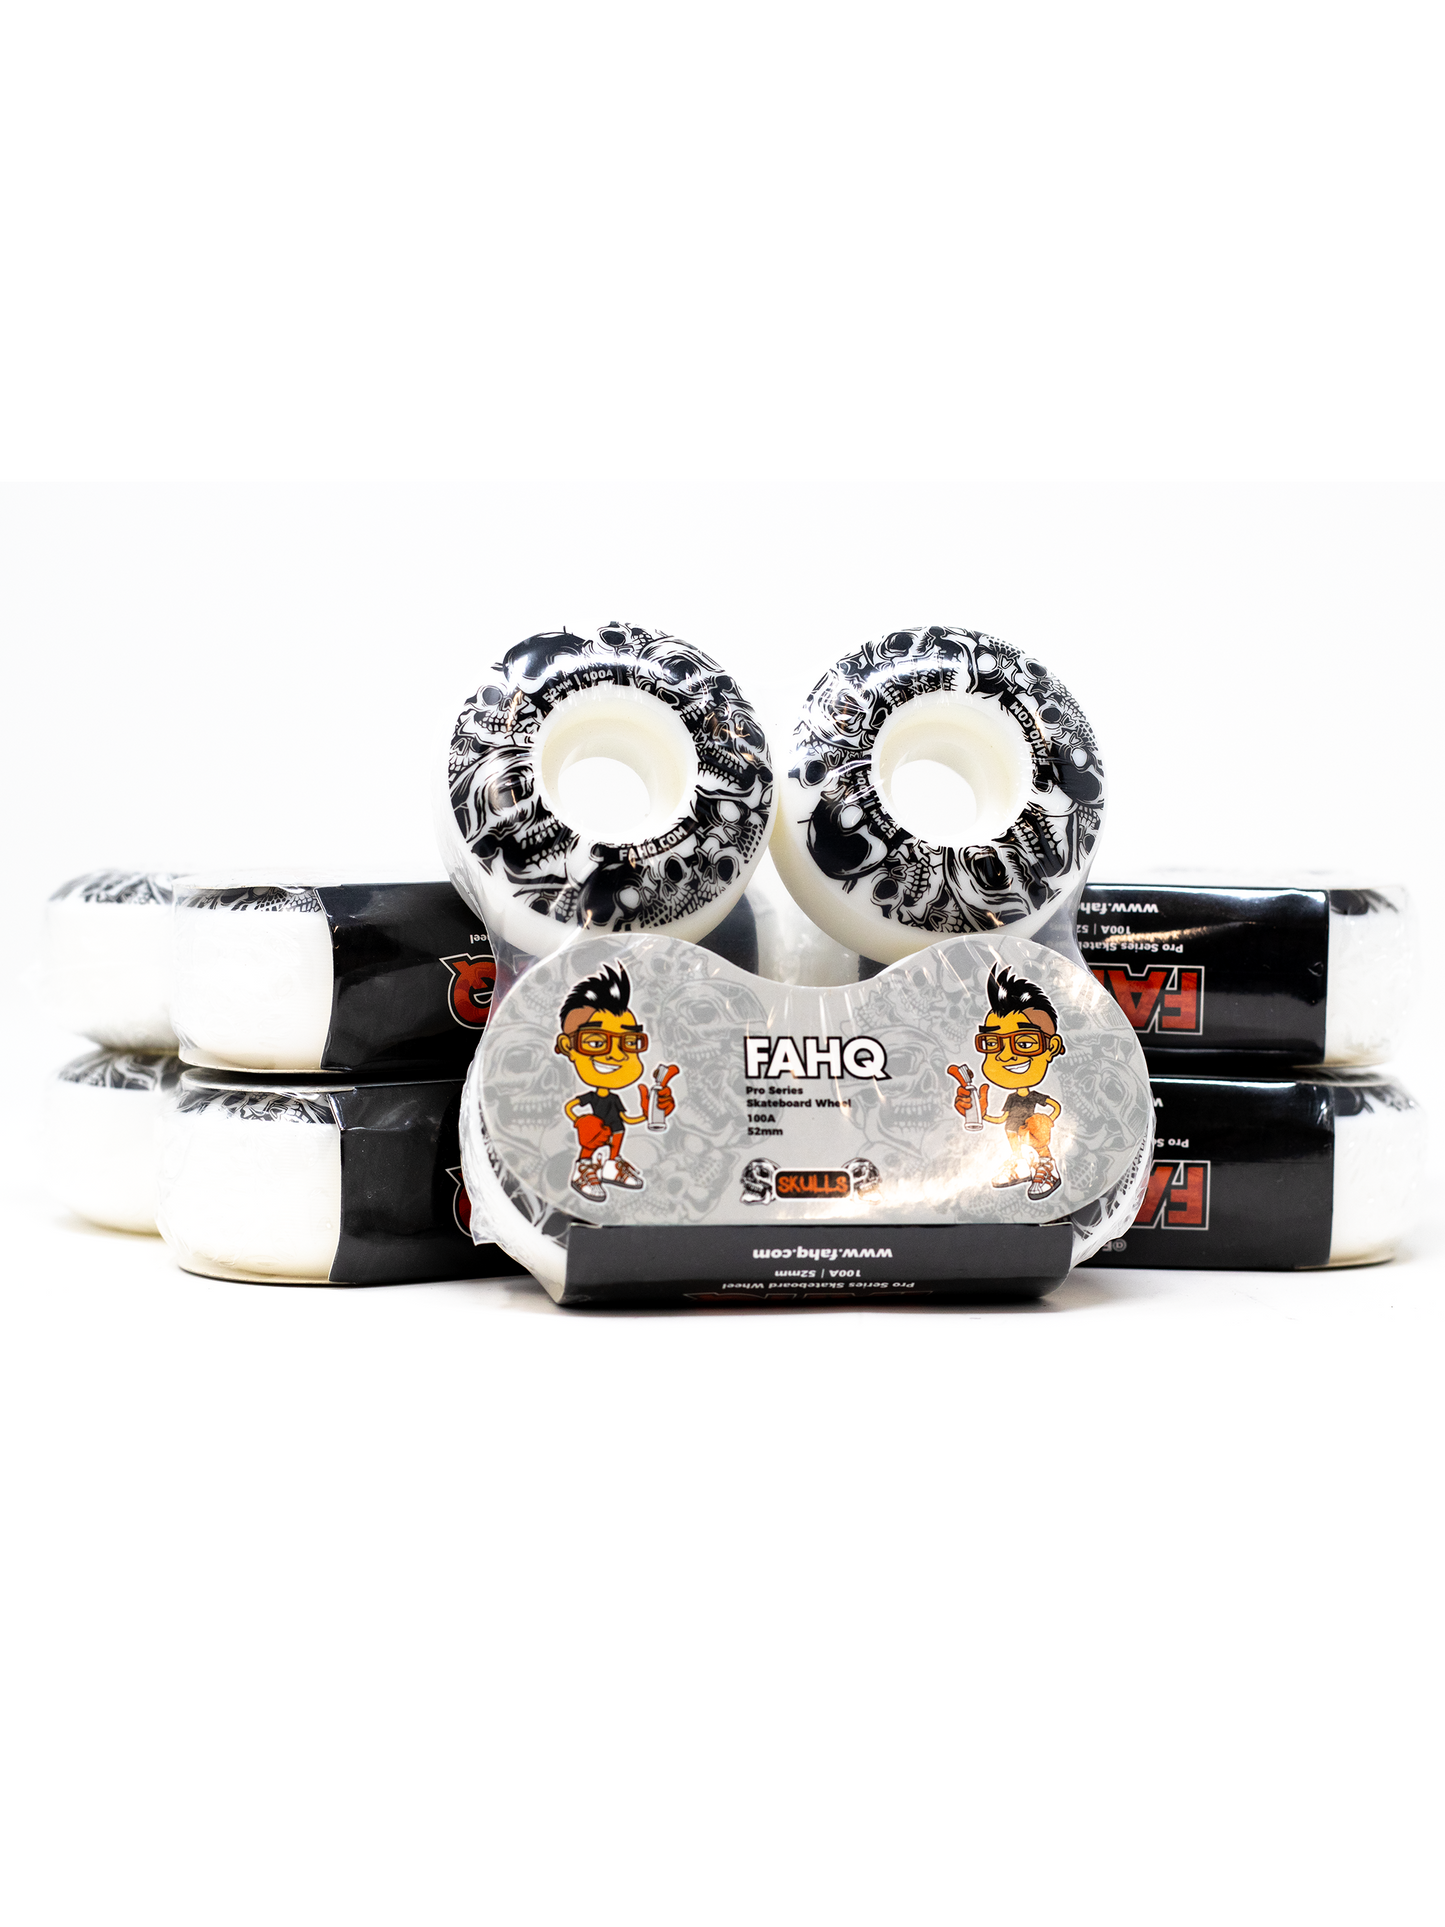 FAHQ Skulls Skateboard Wheels Package